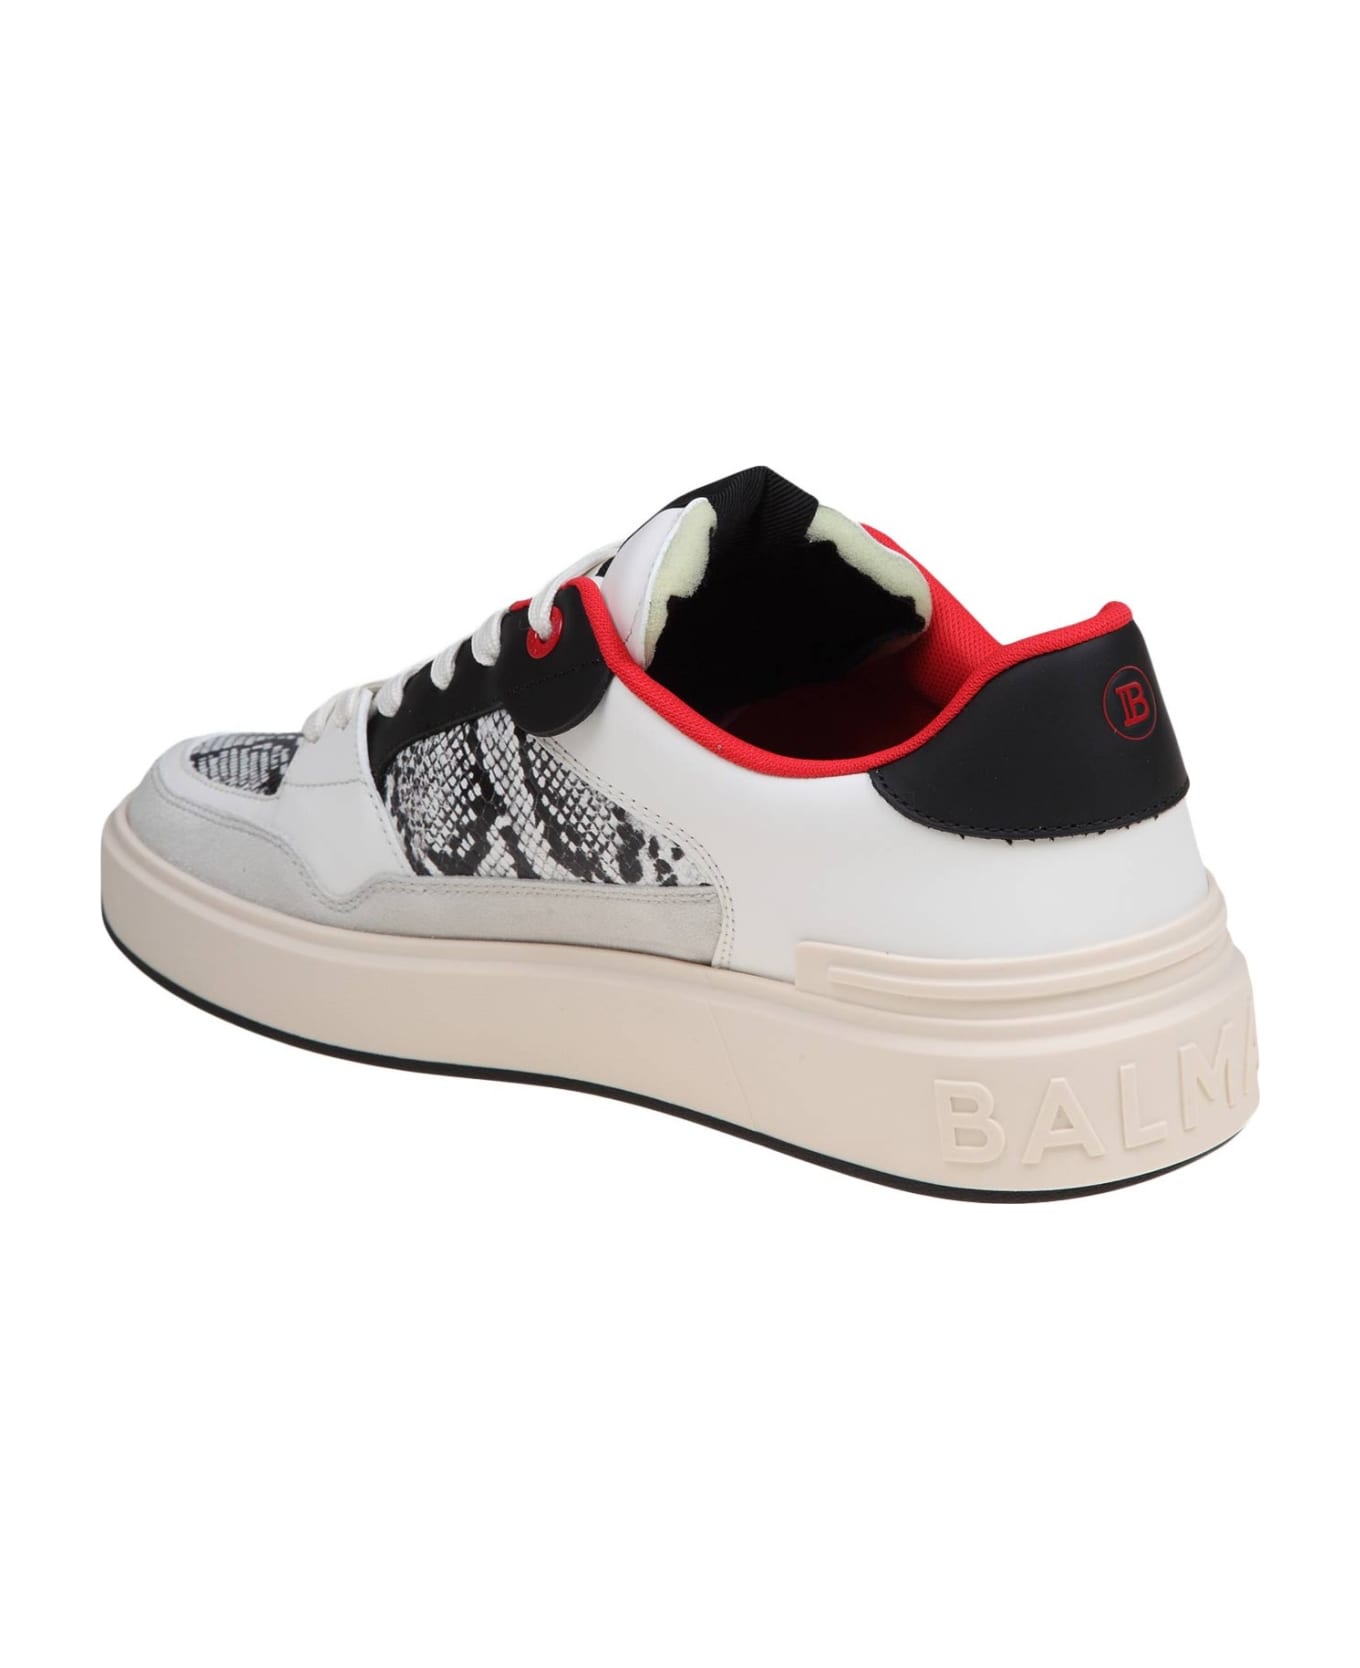 Balmain B-court Flip Sneakers - Grey/Red